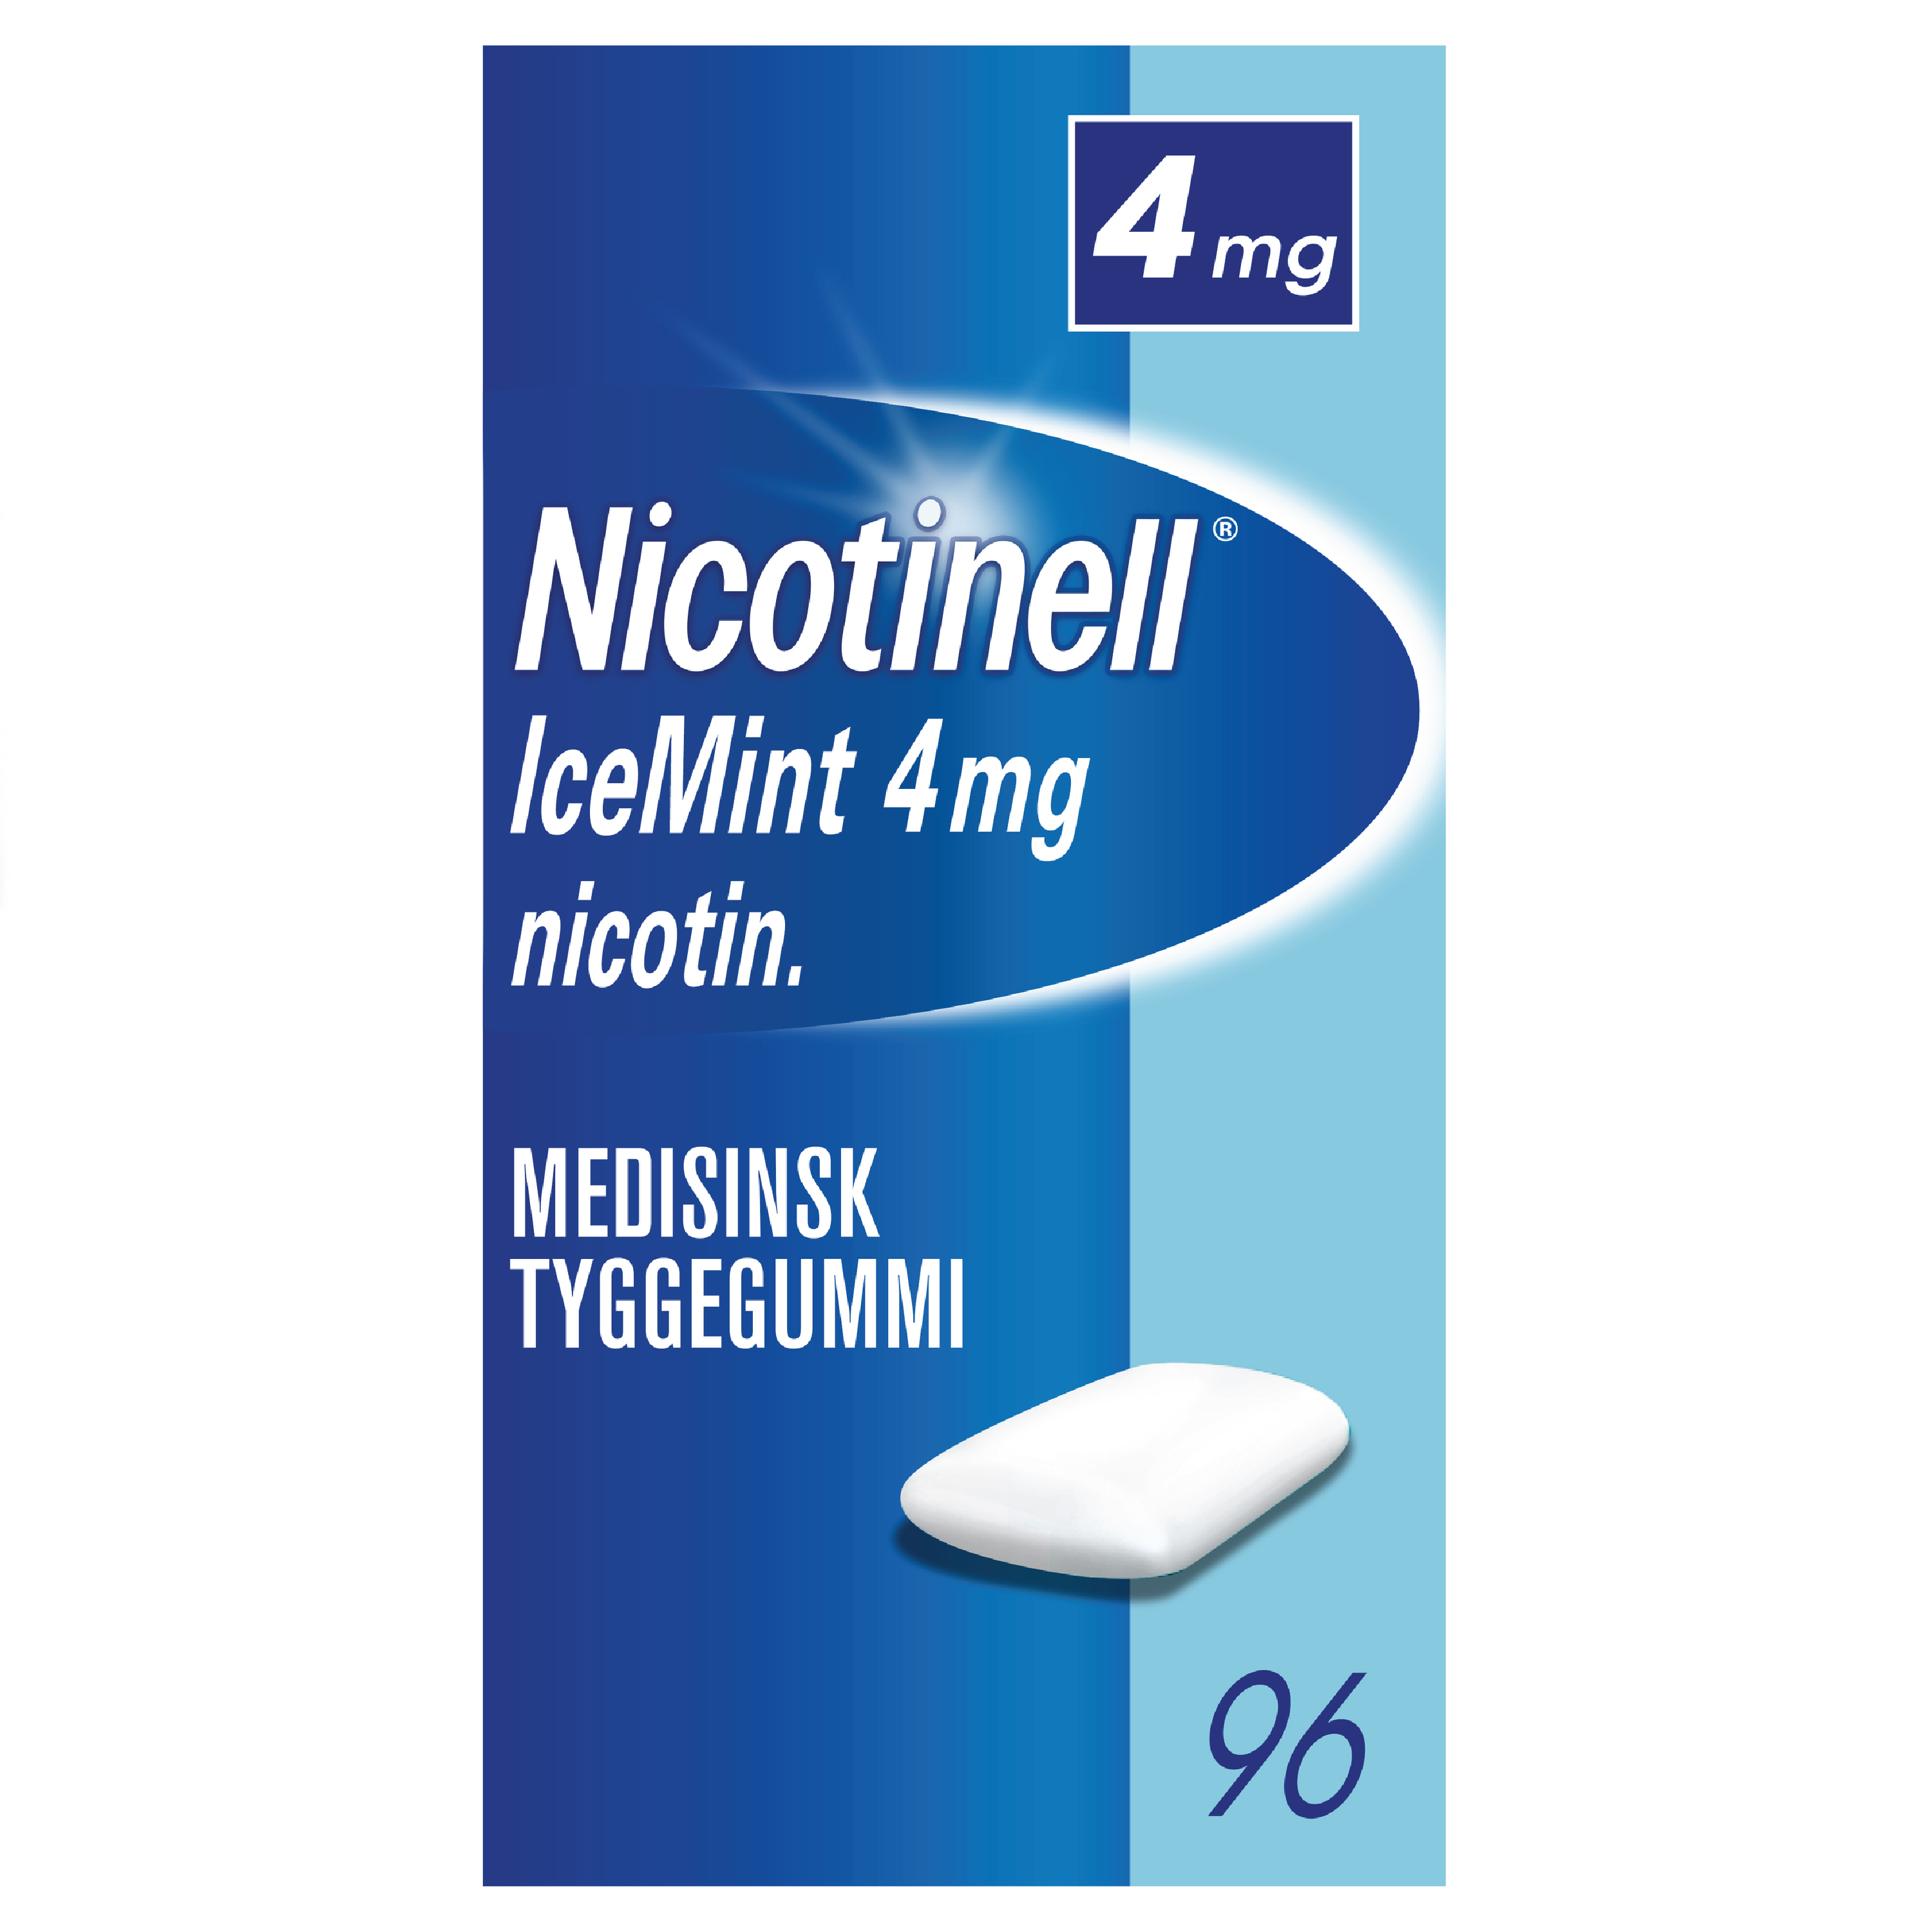 Nicotinell Tyggegummi 4mg icemint, 96 stk.